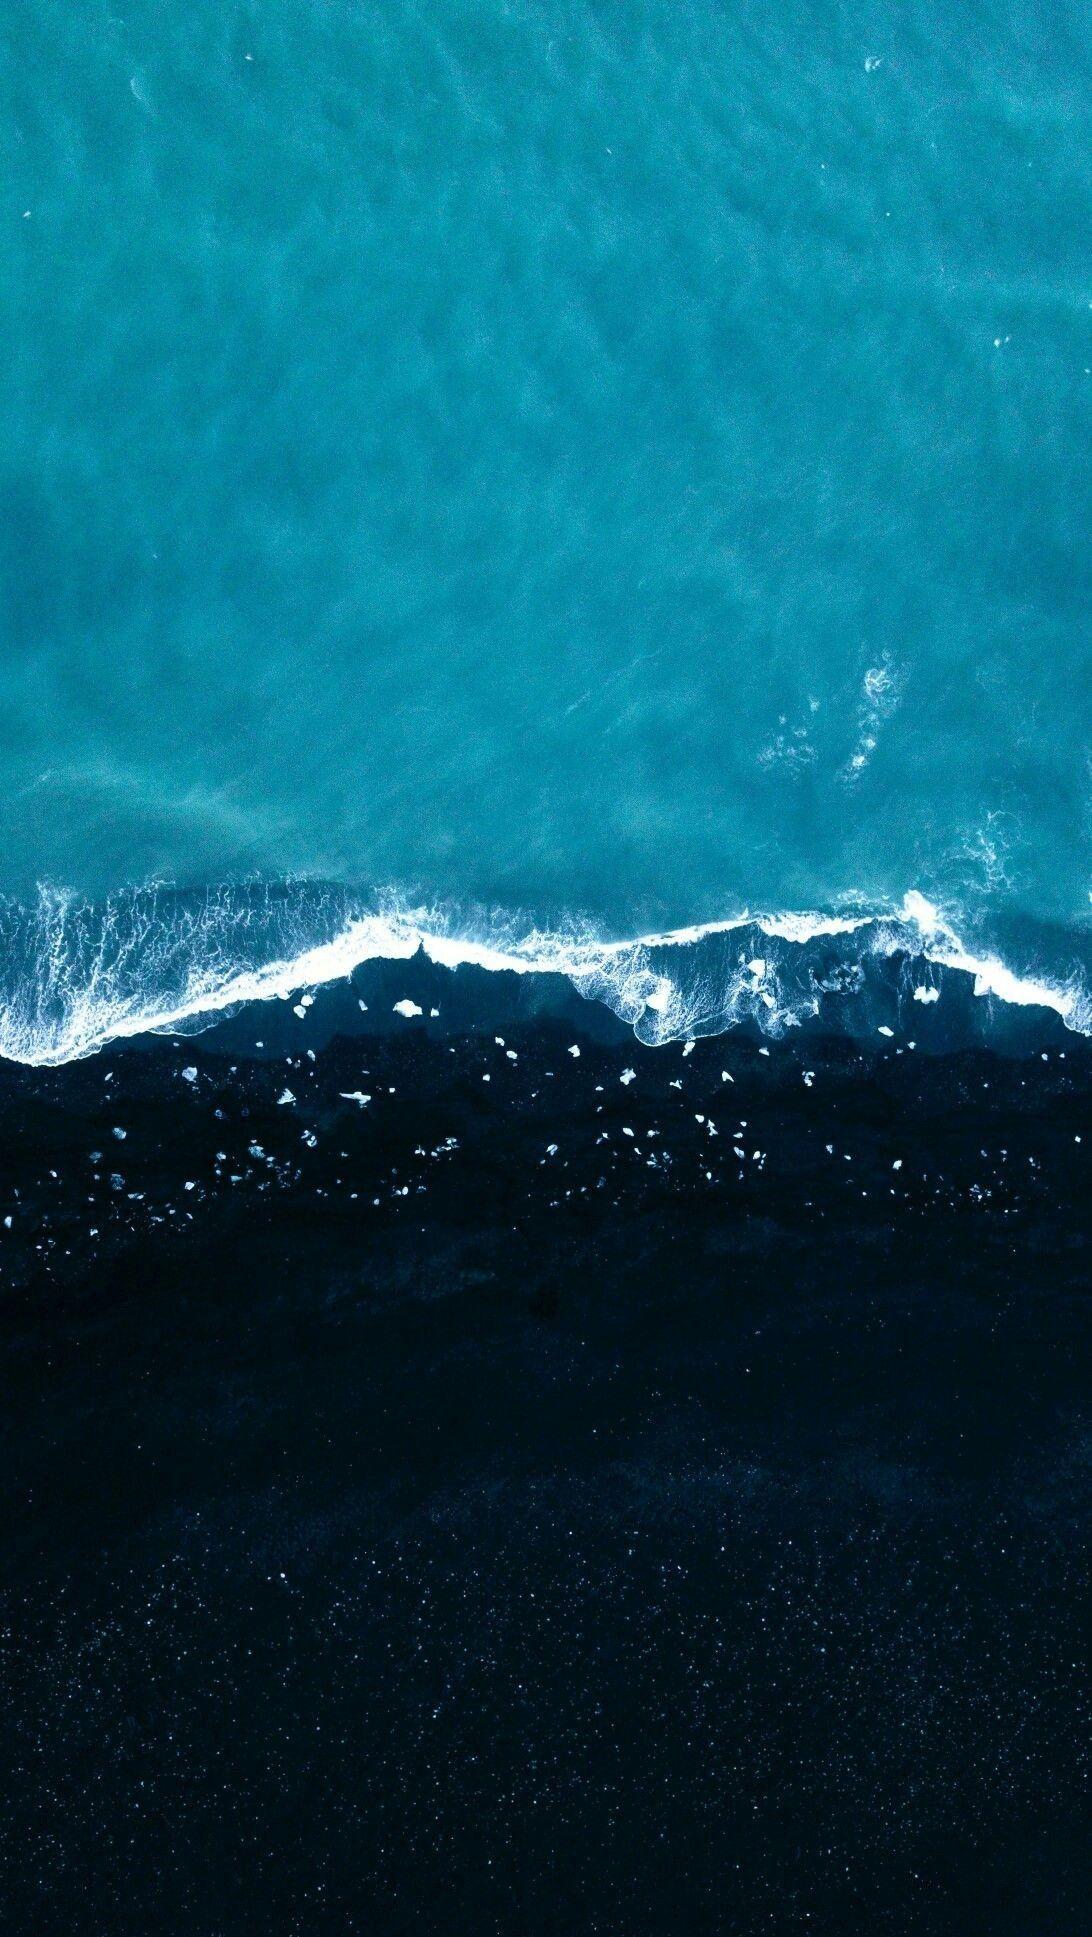 Deep Blue Water Wallpapers